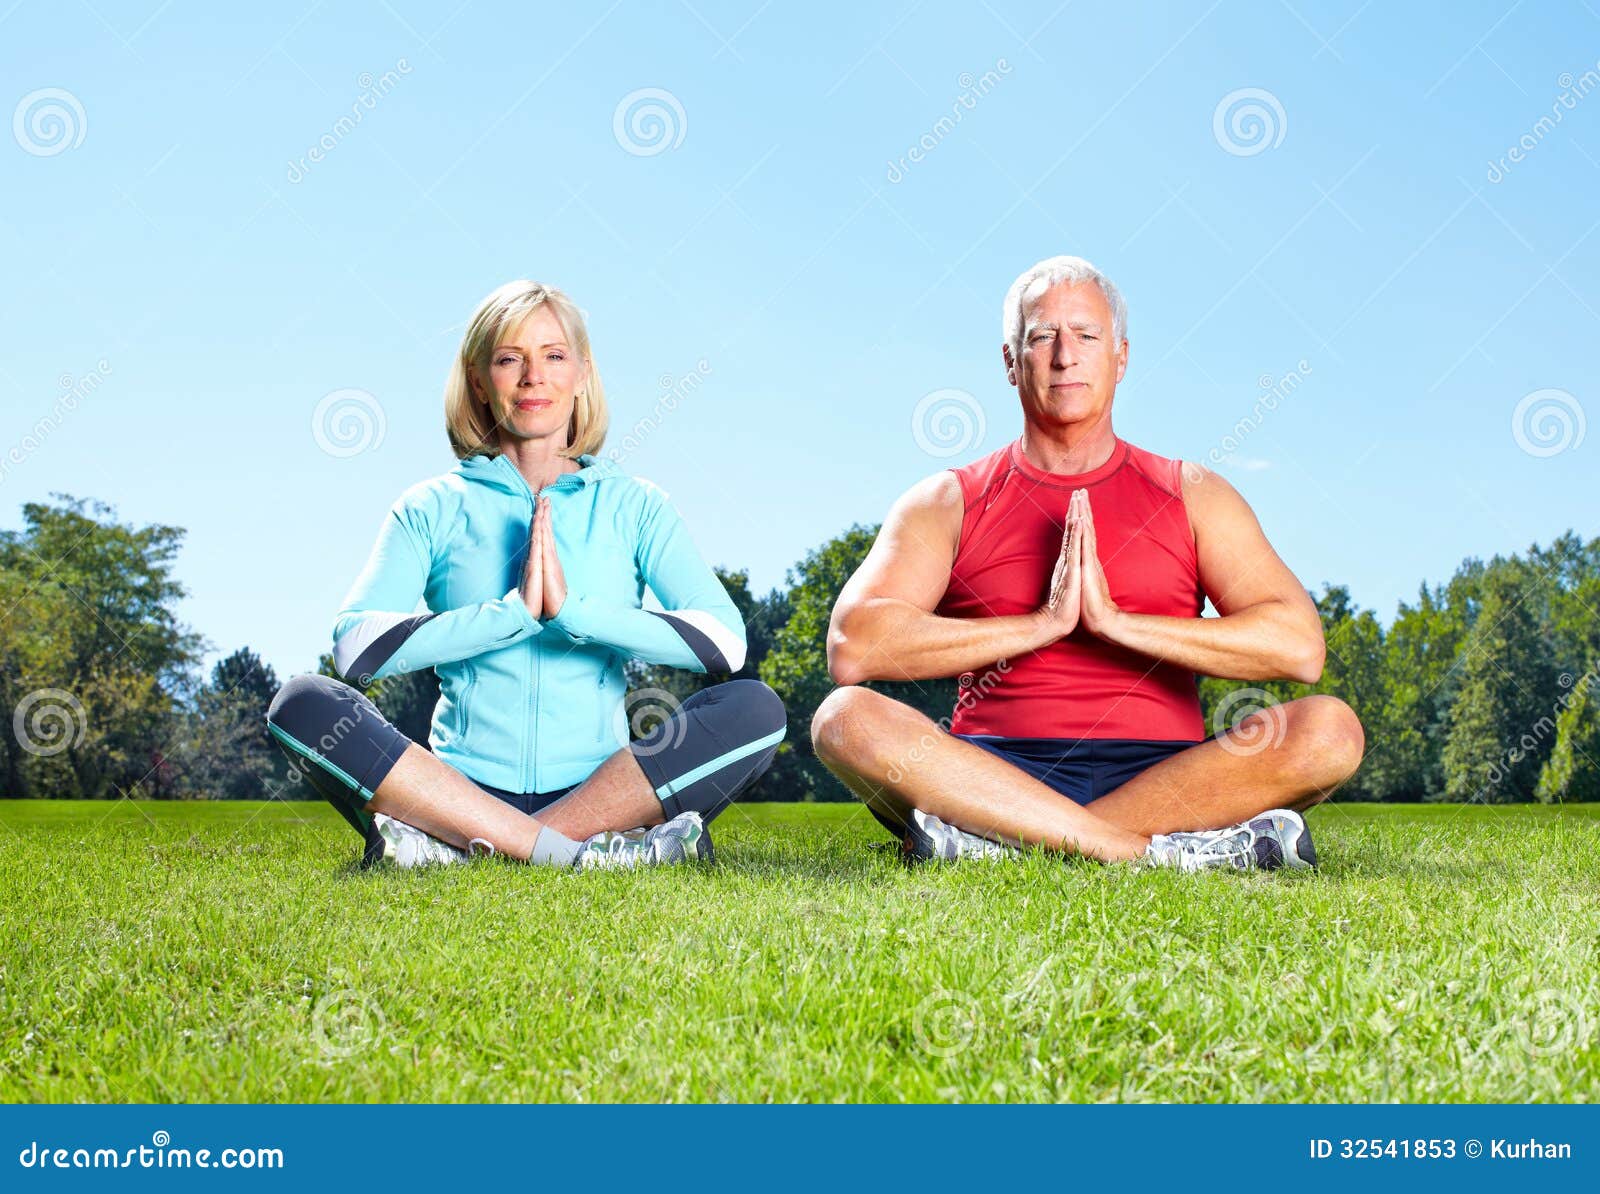 gym-fitness-healthy-lifestyle-senior-couple-park-32541853.jpg